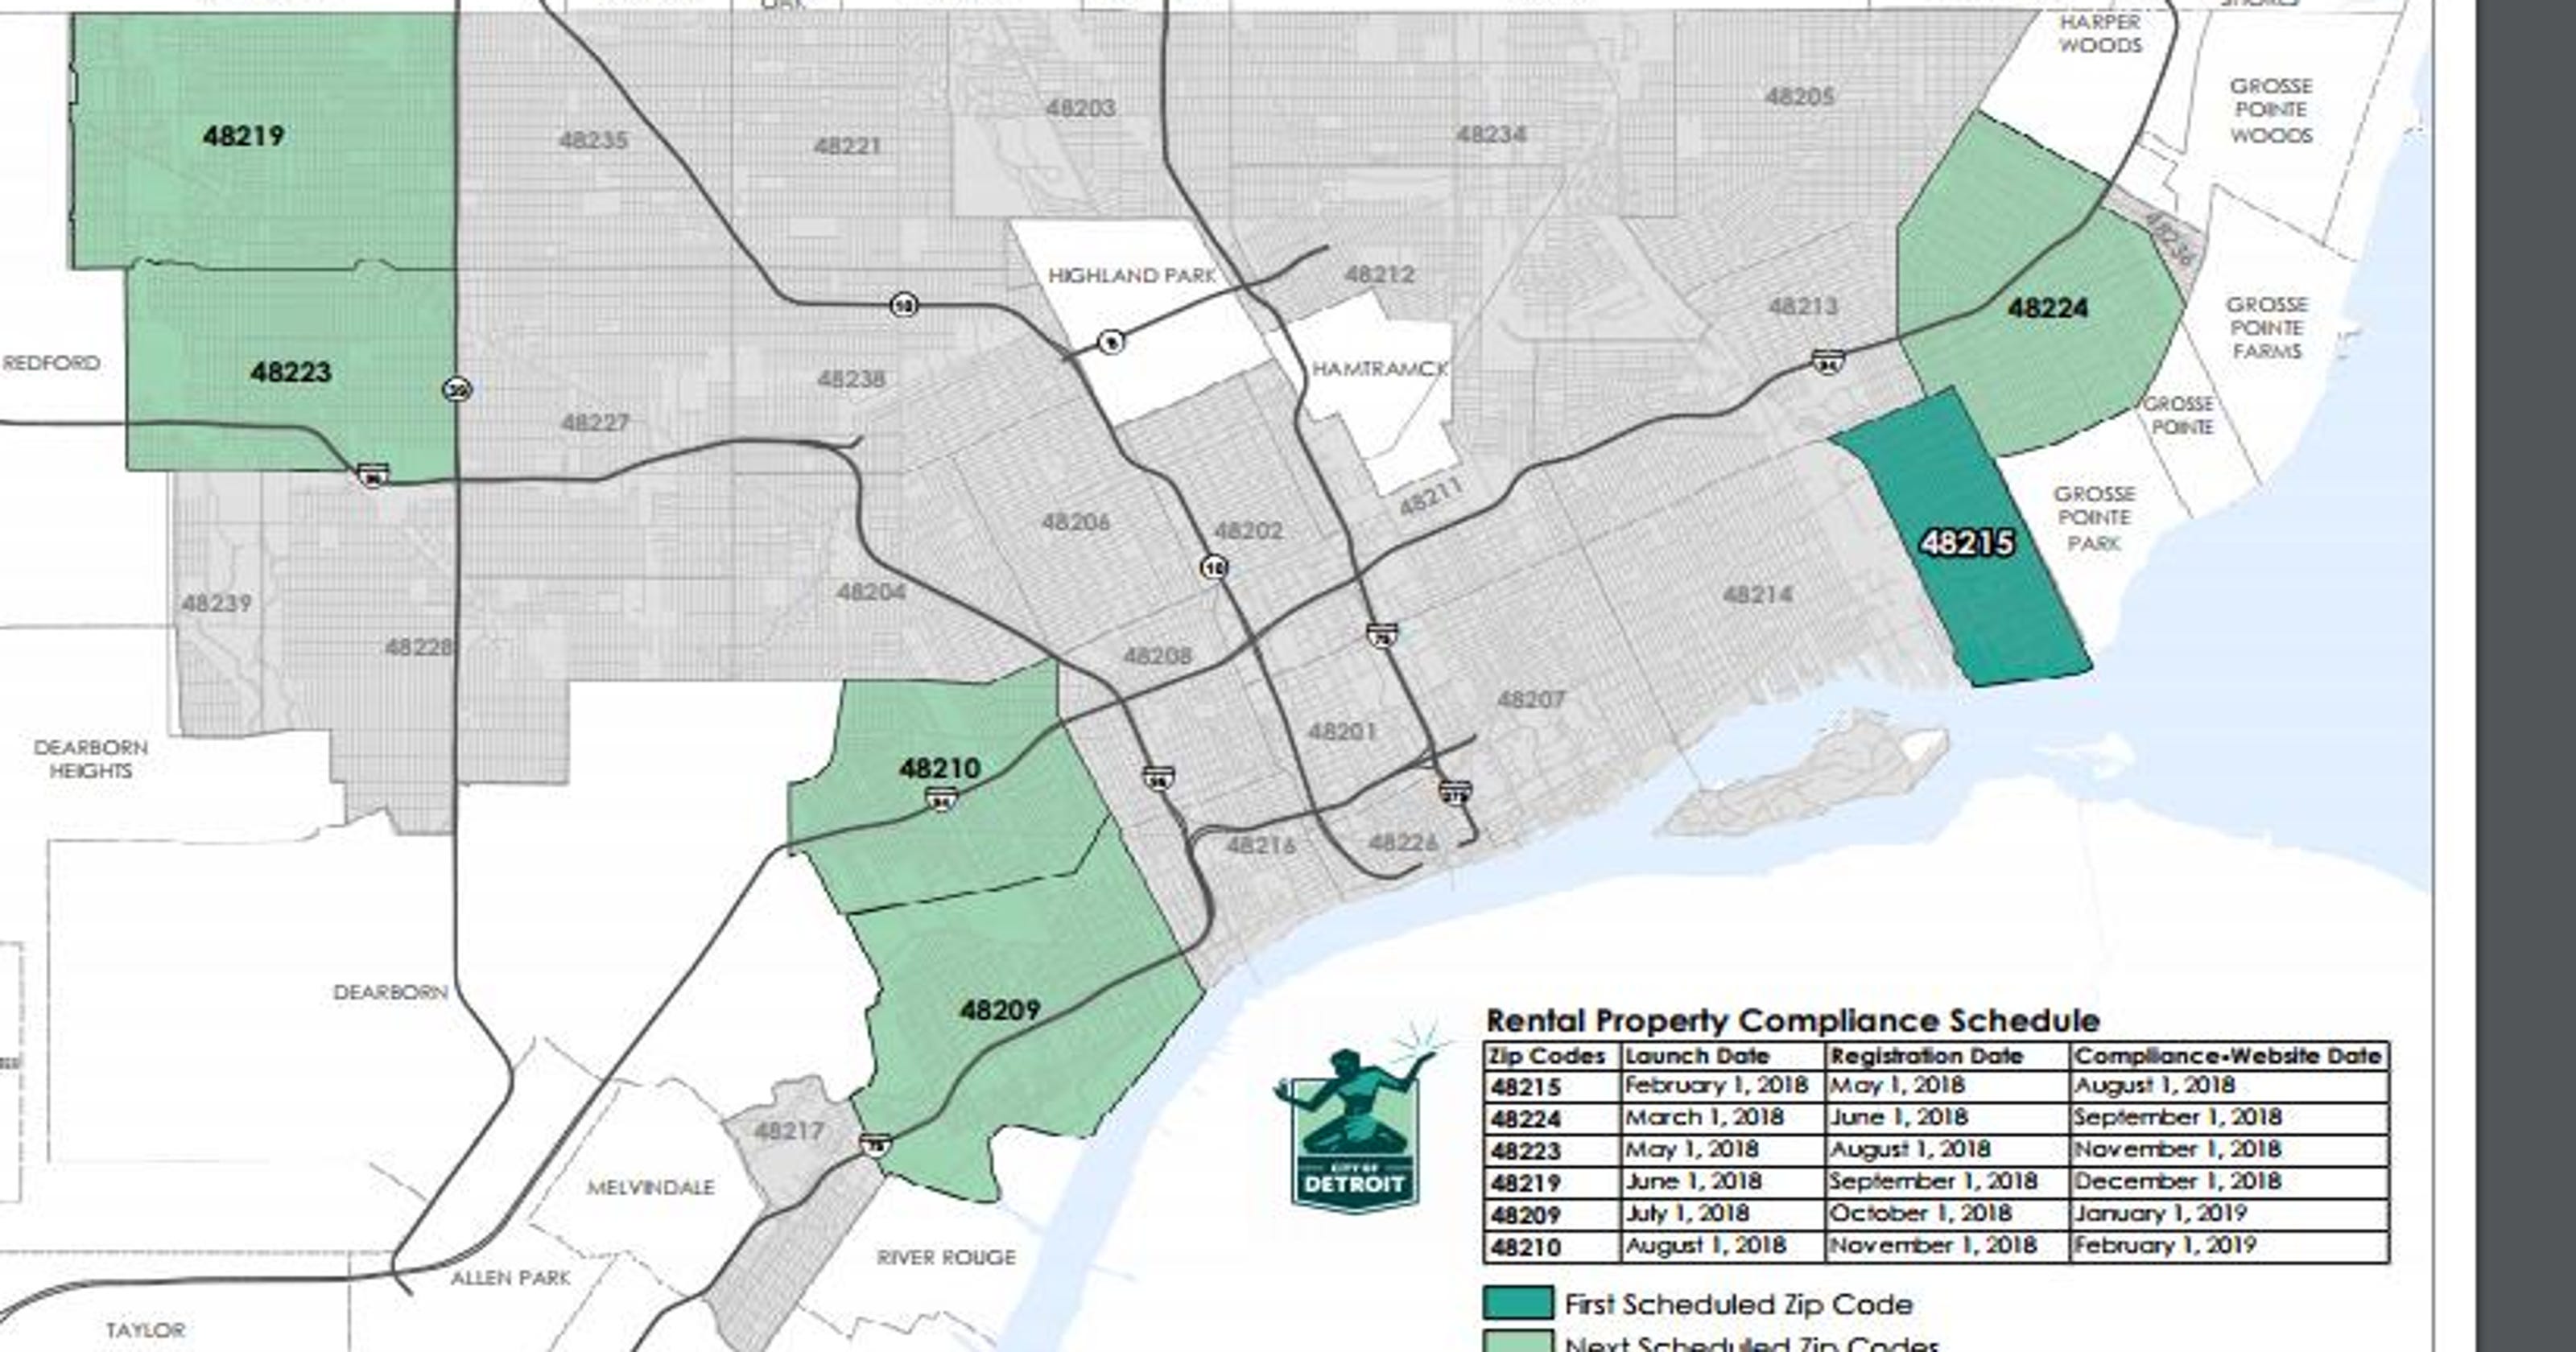 Detroit cites six ZIP codes for rental inspections